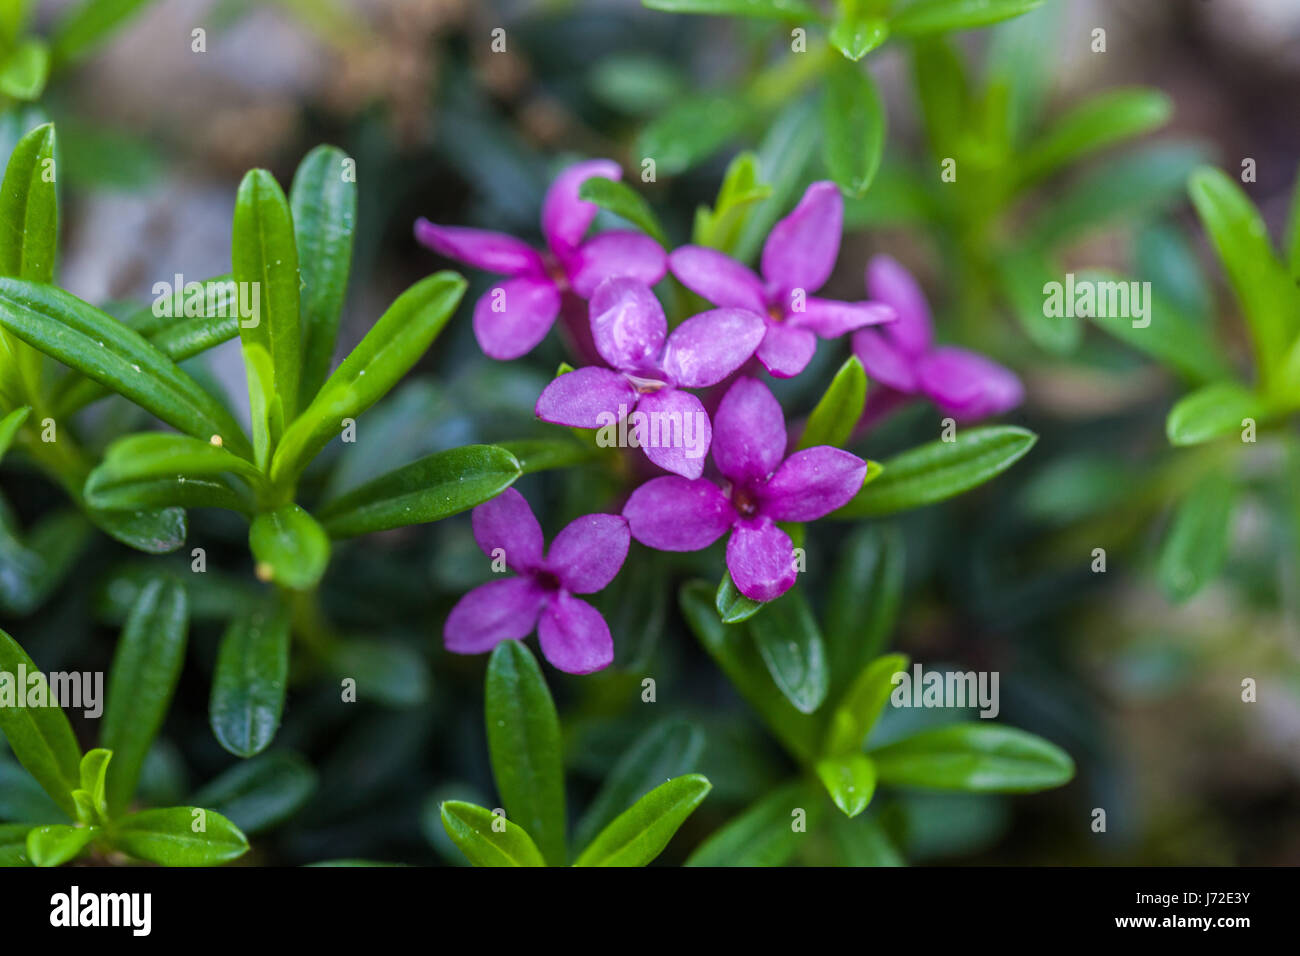 Daphne schlyteri purple plant close up Stock Photo